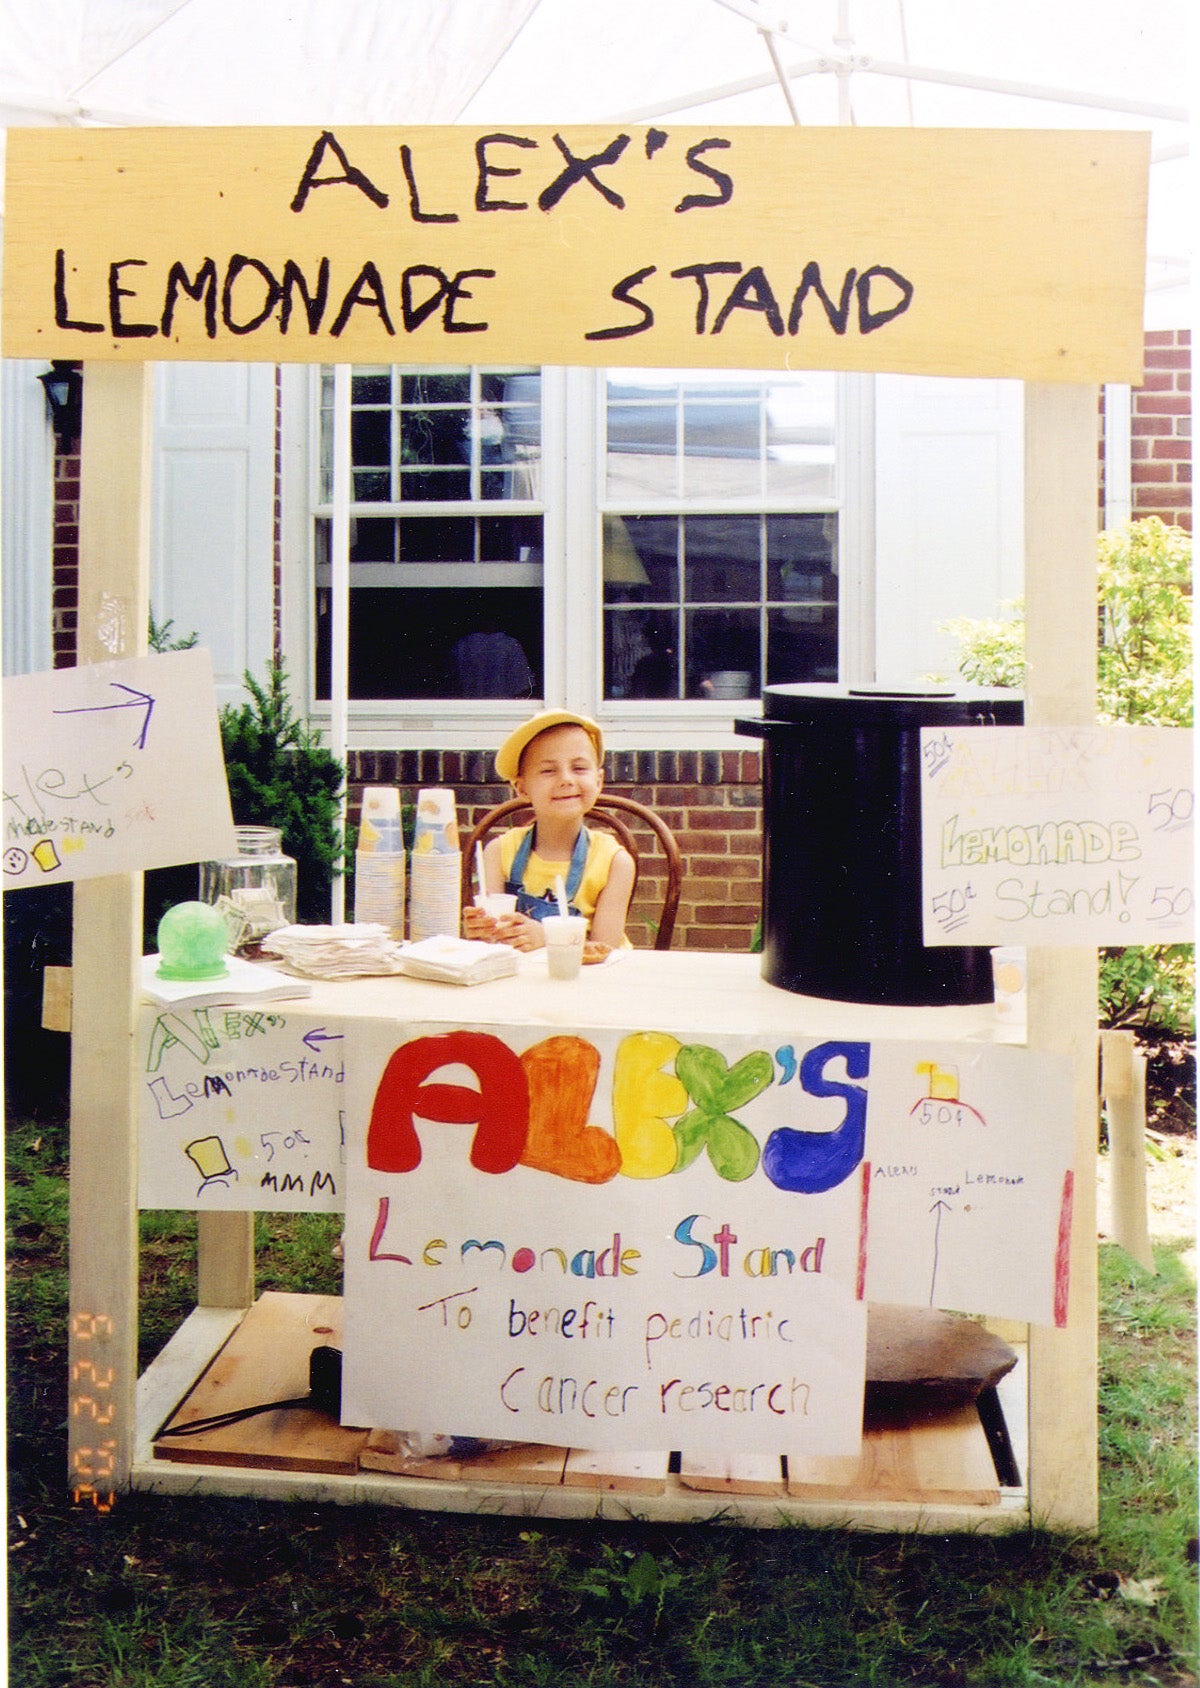 About Alex's Lemonade Stand